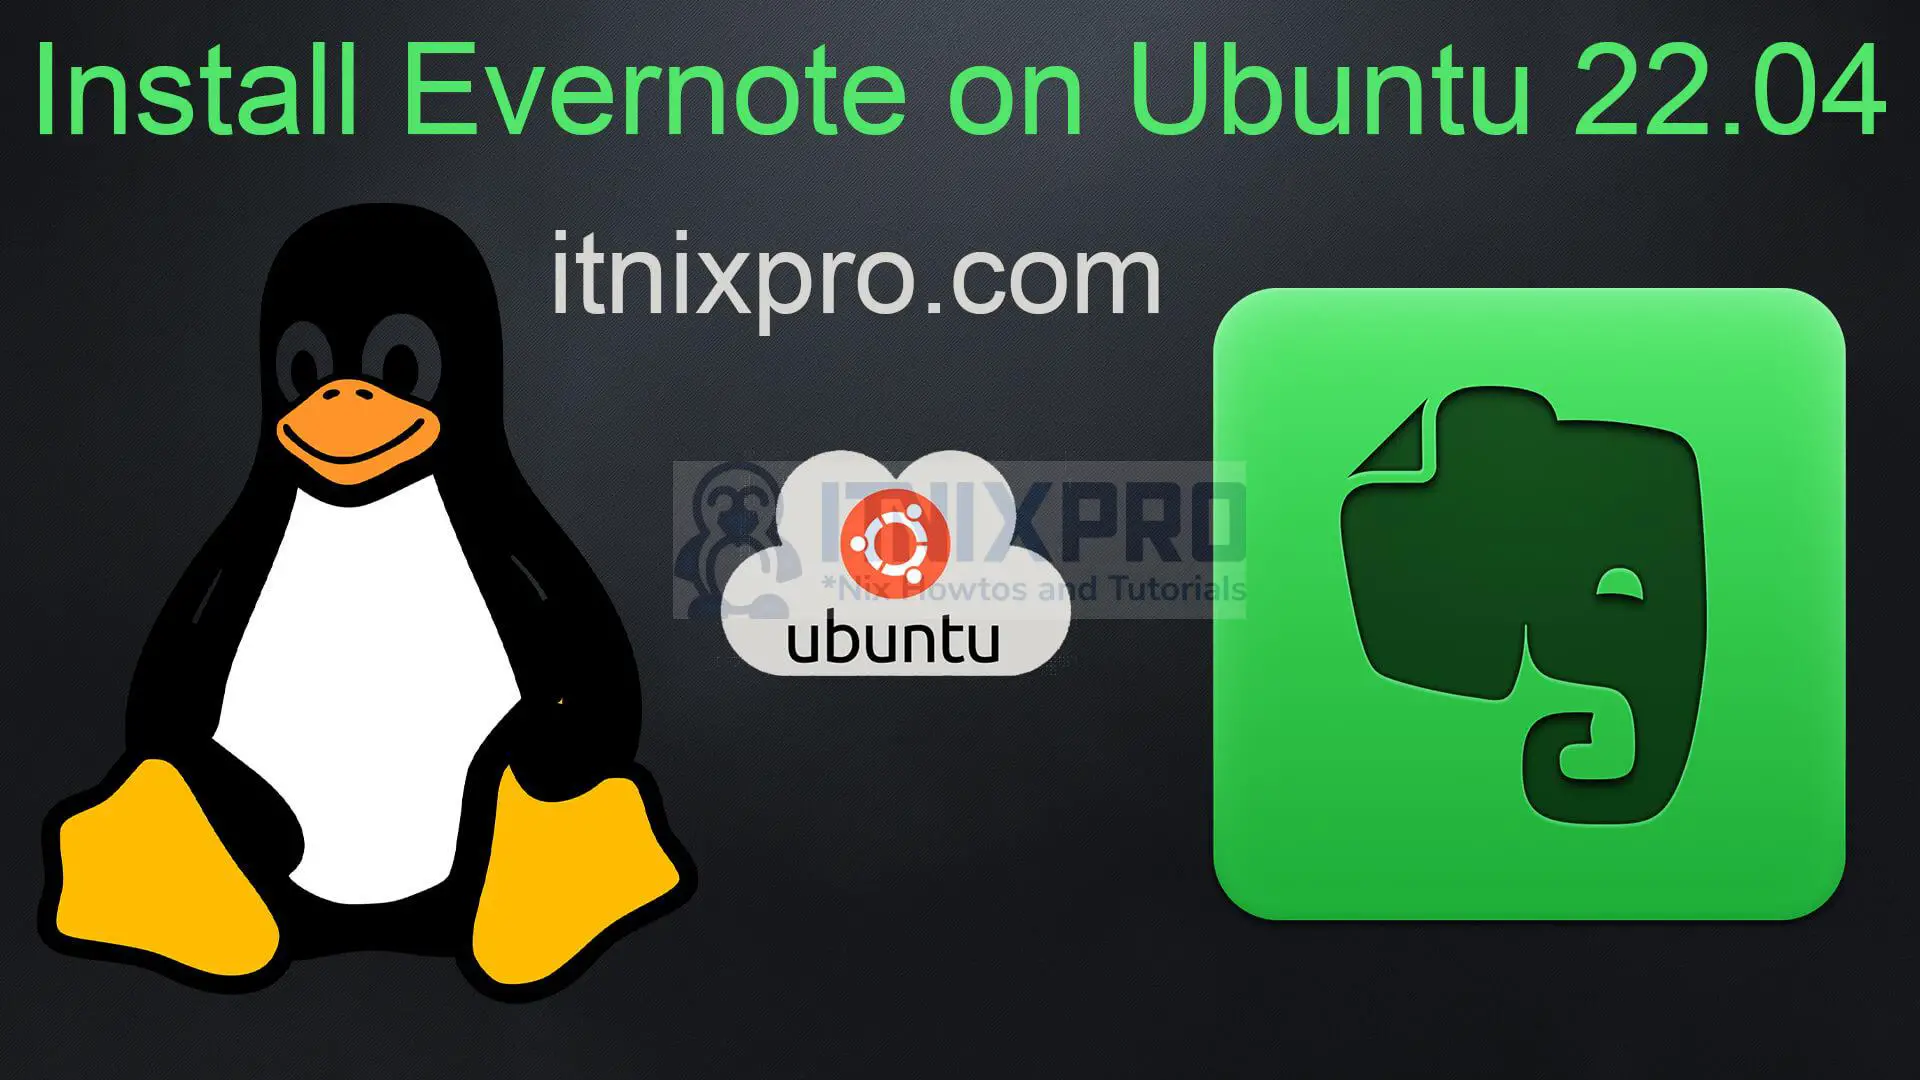 Install Evernote on Ubuntu 22.04